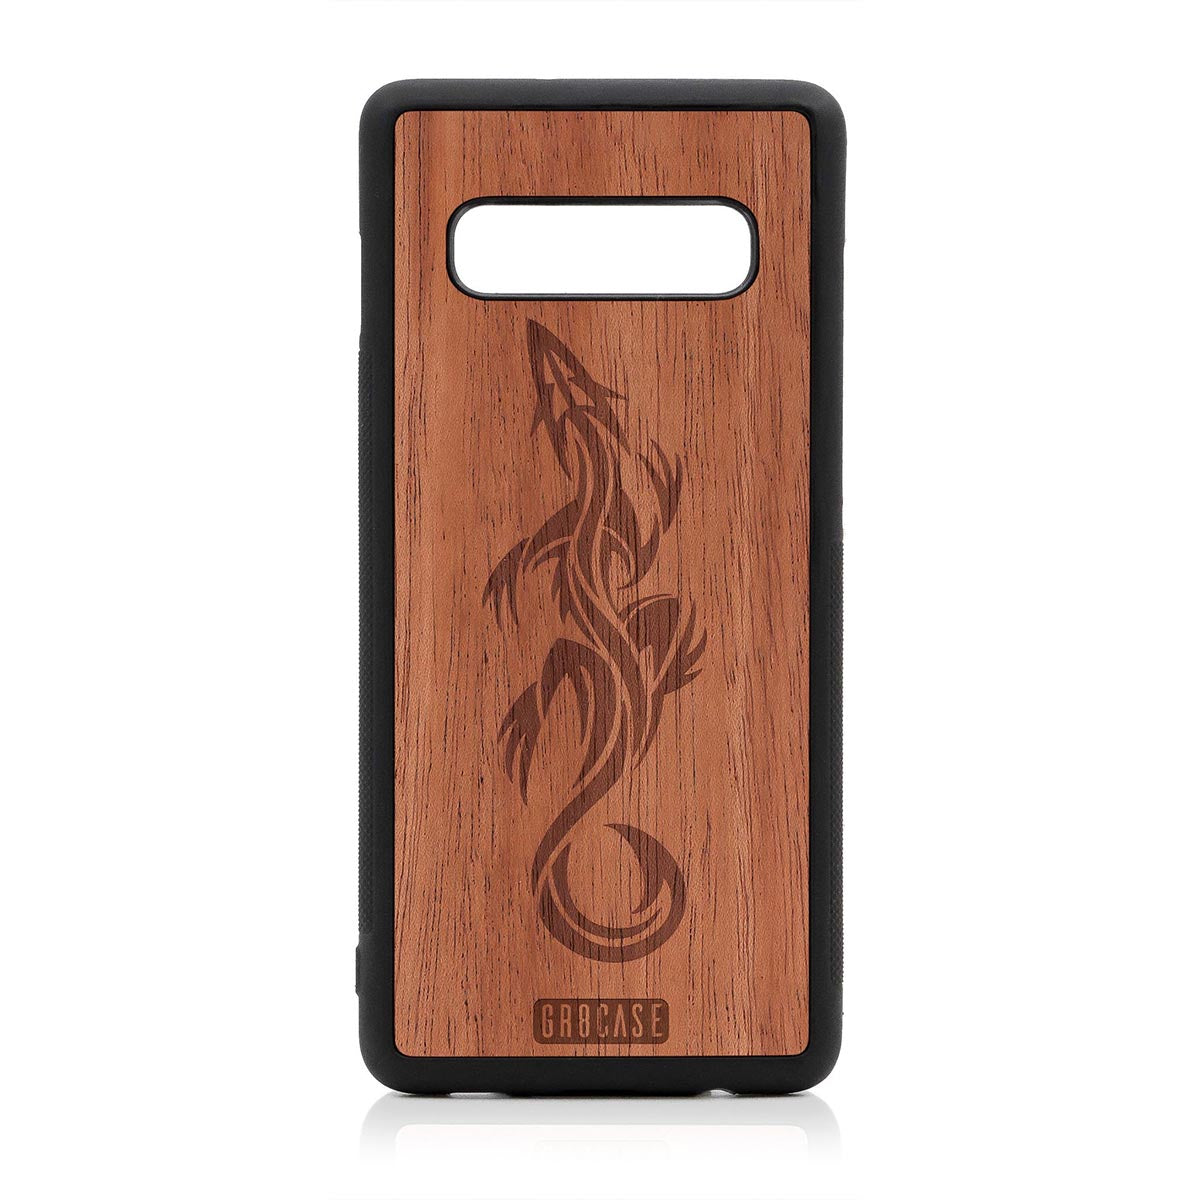 Lizard Design Wood Case Samsung Galaxy S10 Plus by GR8CASE